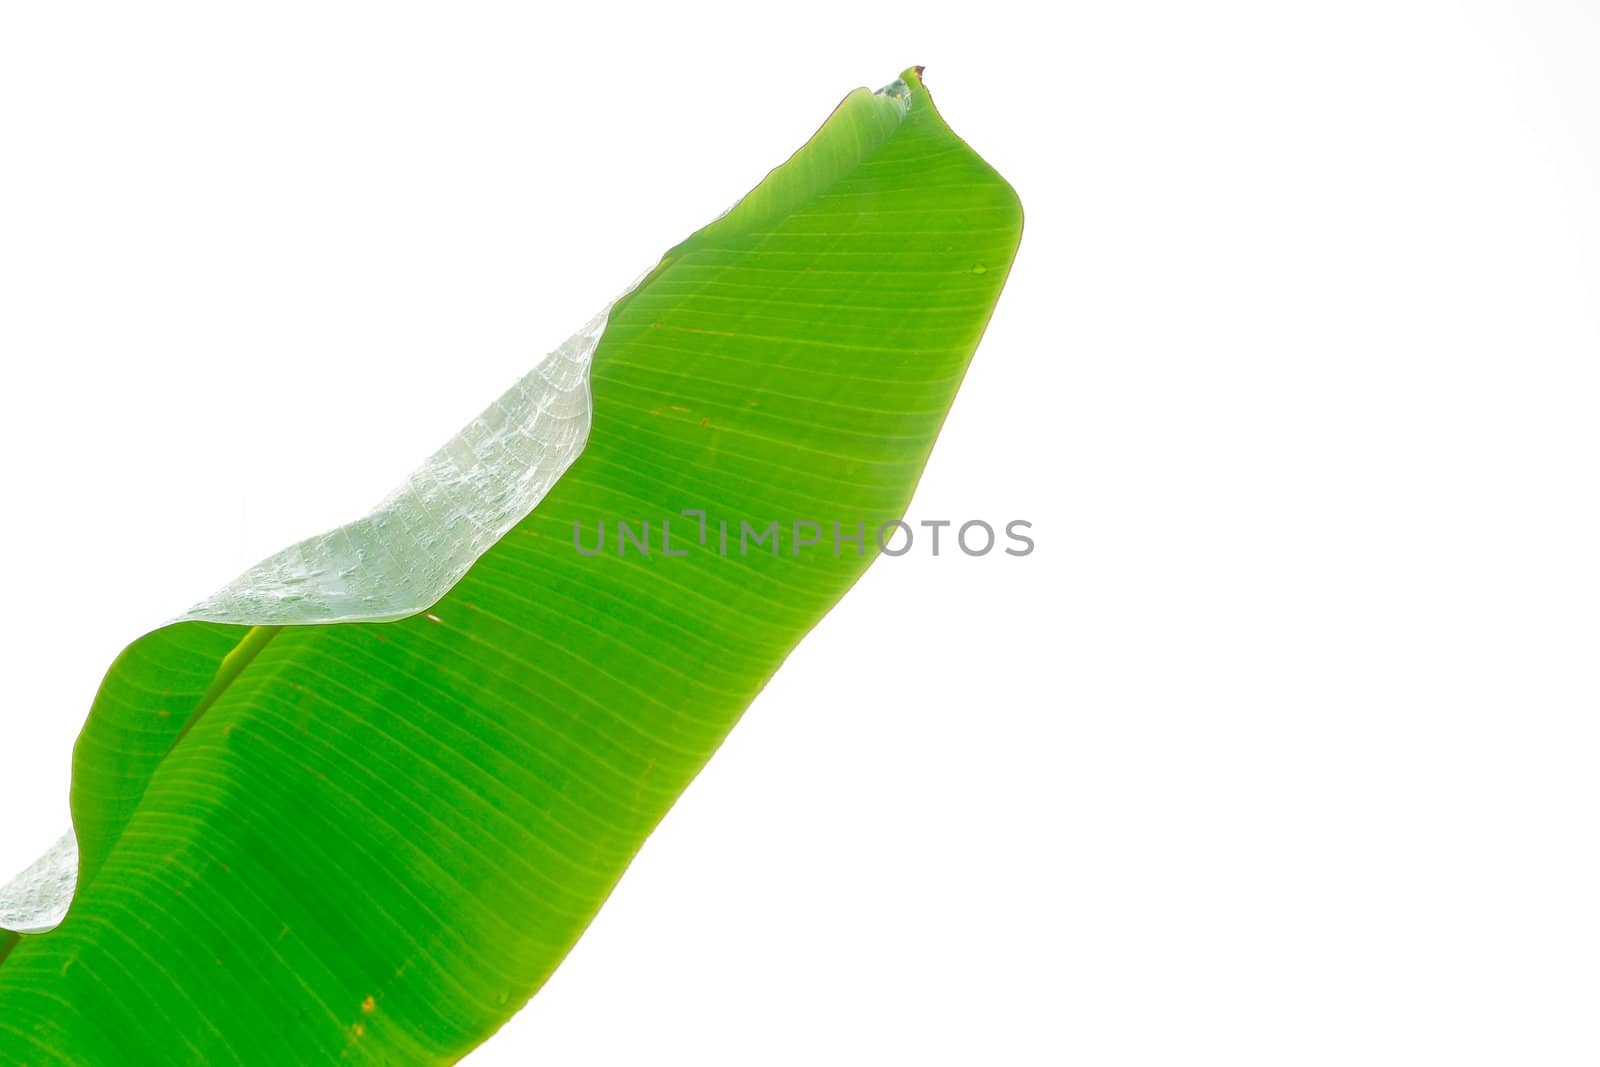 Banana leaf on white background by raywoo